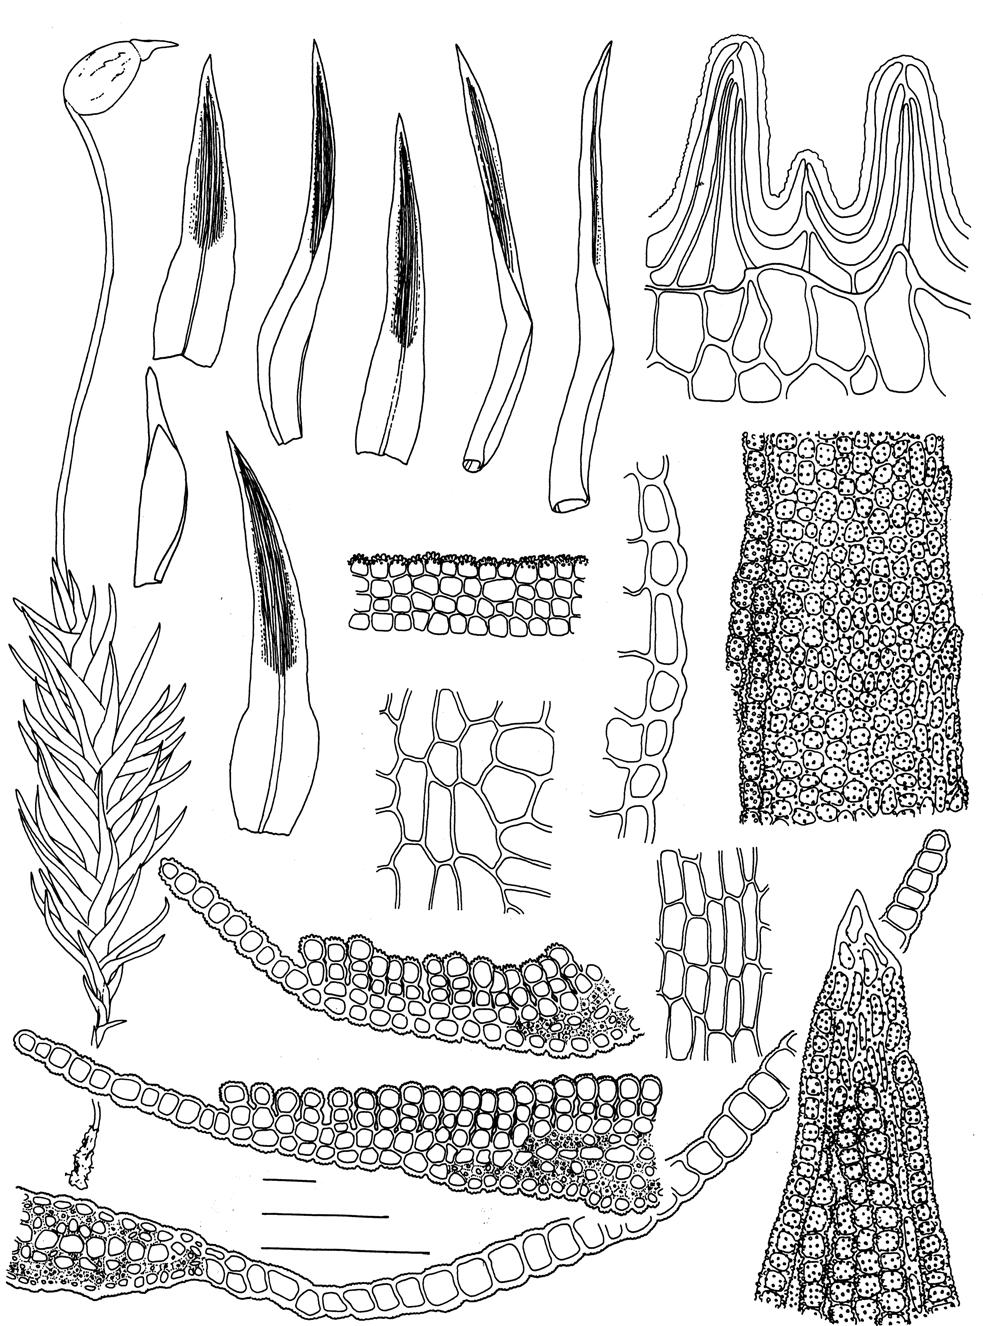 50 b c d f g r q n e p i o a k j l m 100 µm, b-g, q 500 µm, a 100 µm, h-p, r h Figura 11. Notoligotrichum minimum (Cardot) G.L. Smith. a. gametófito feminino, b-e. filídios, f-g.